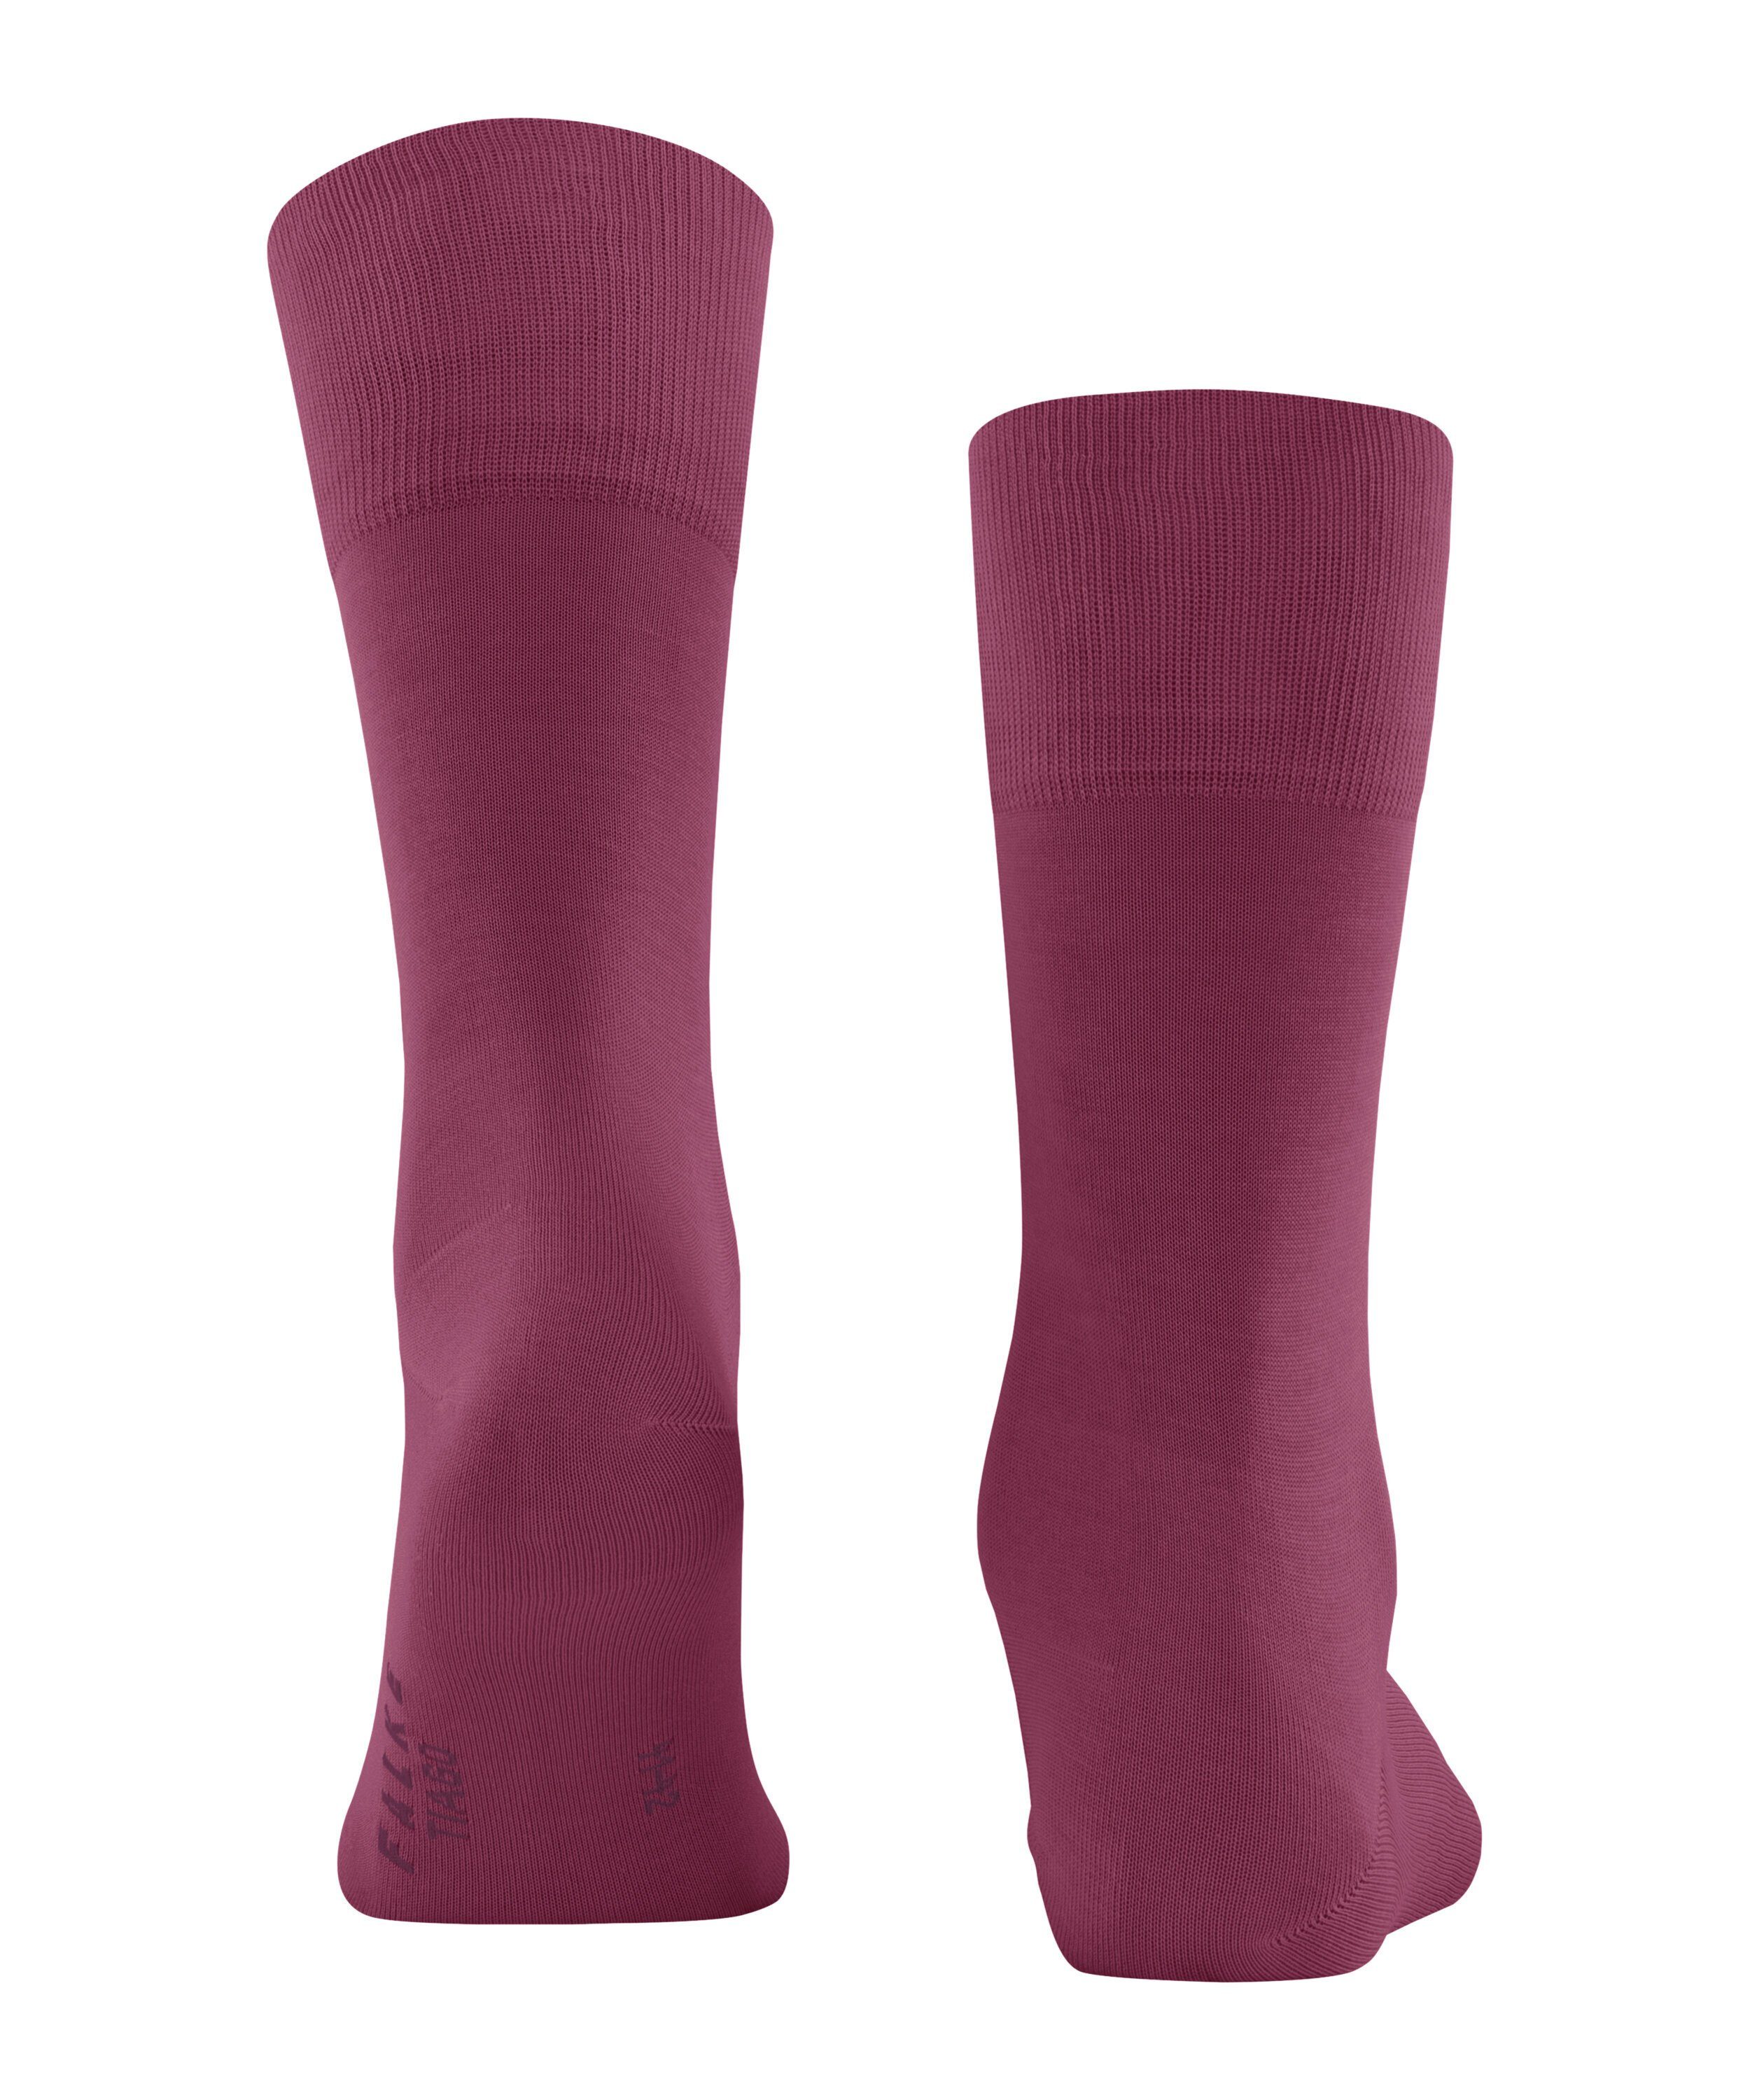 FALKE Socken (8236) plum Tiago red (1-Paar)